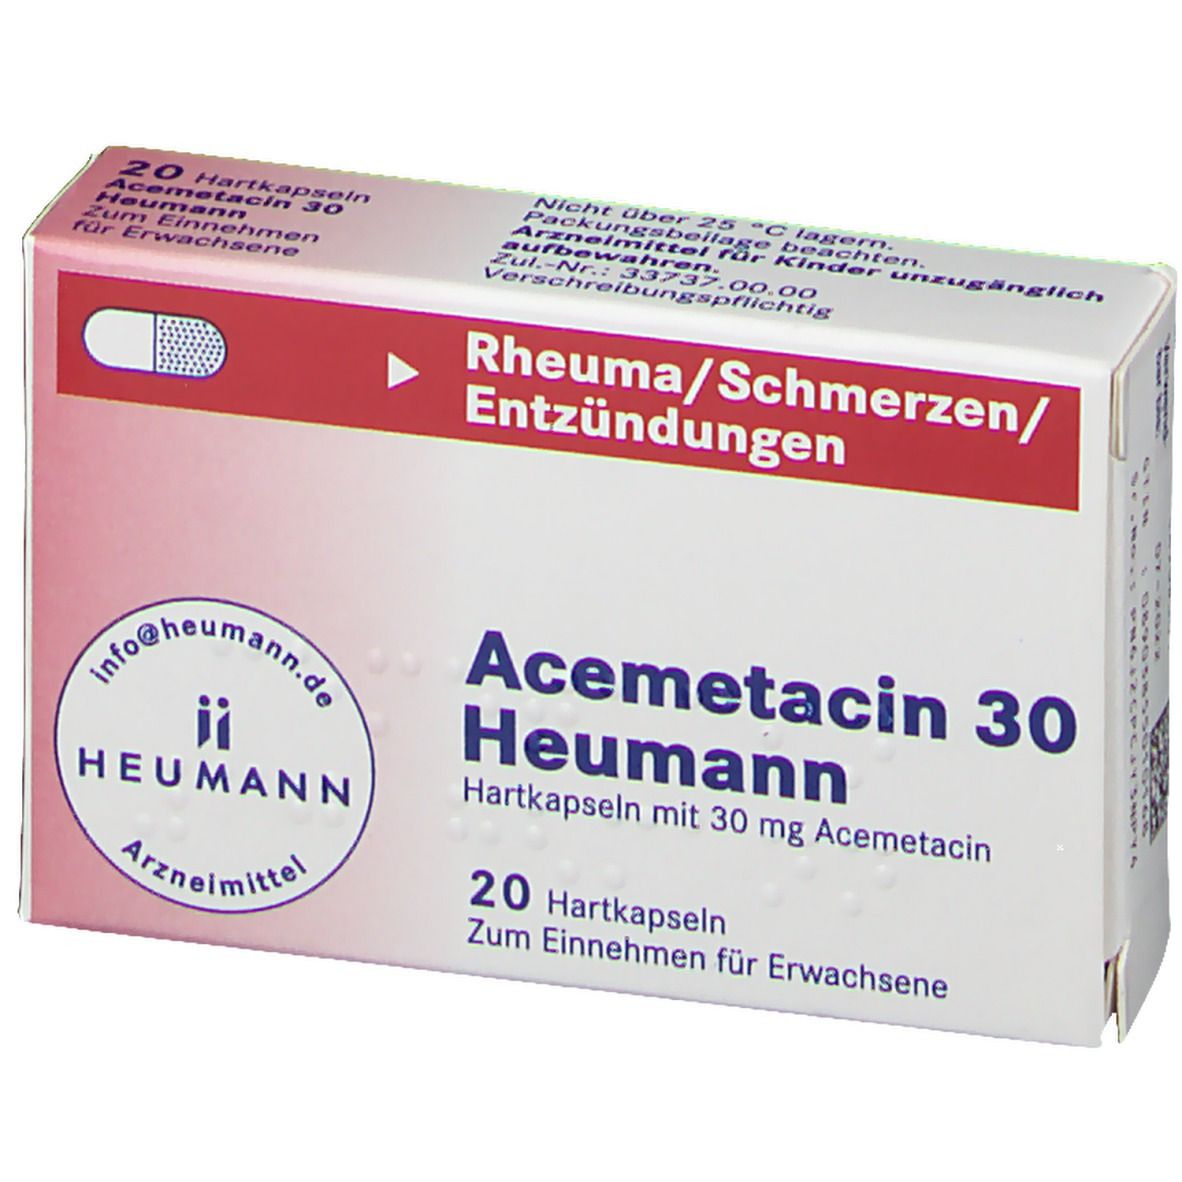 Acemetacin 30 Heumann